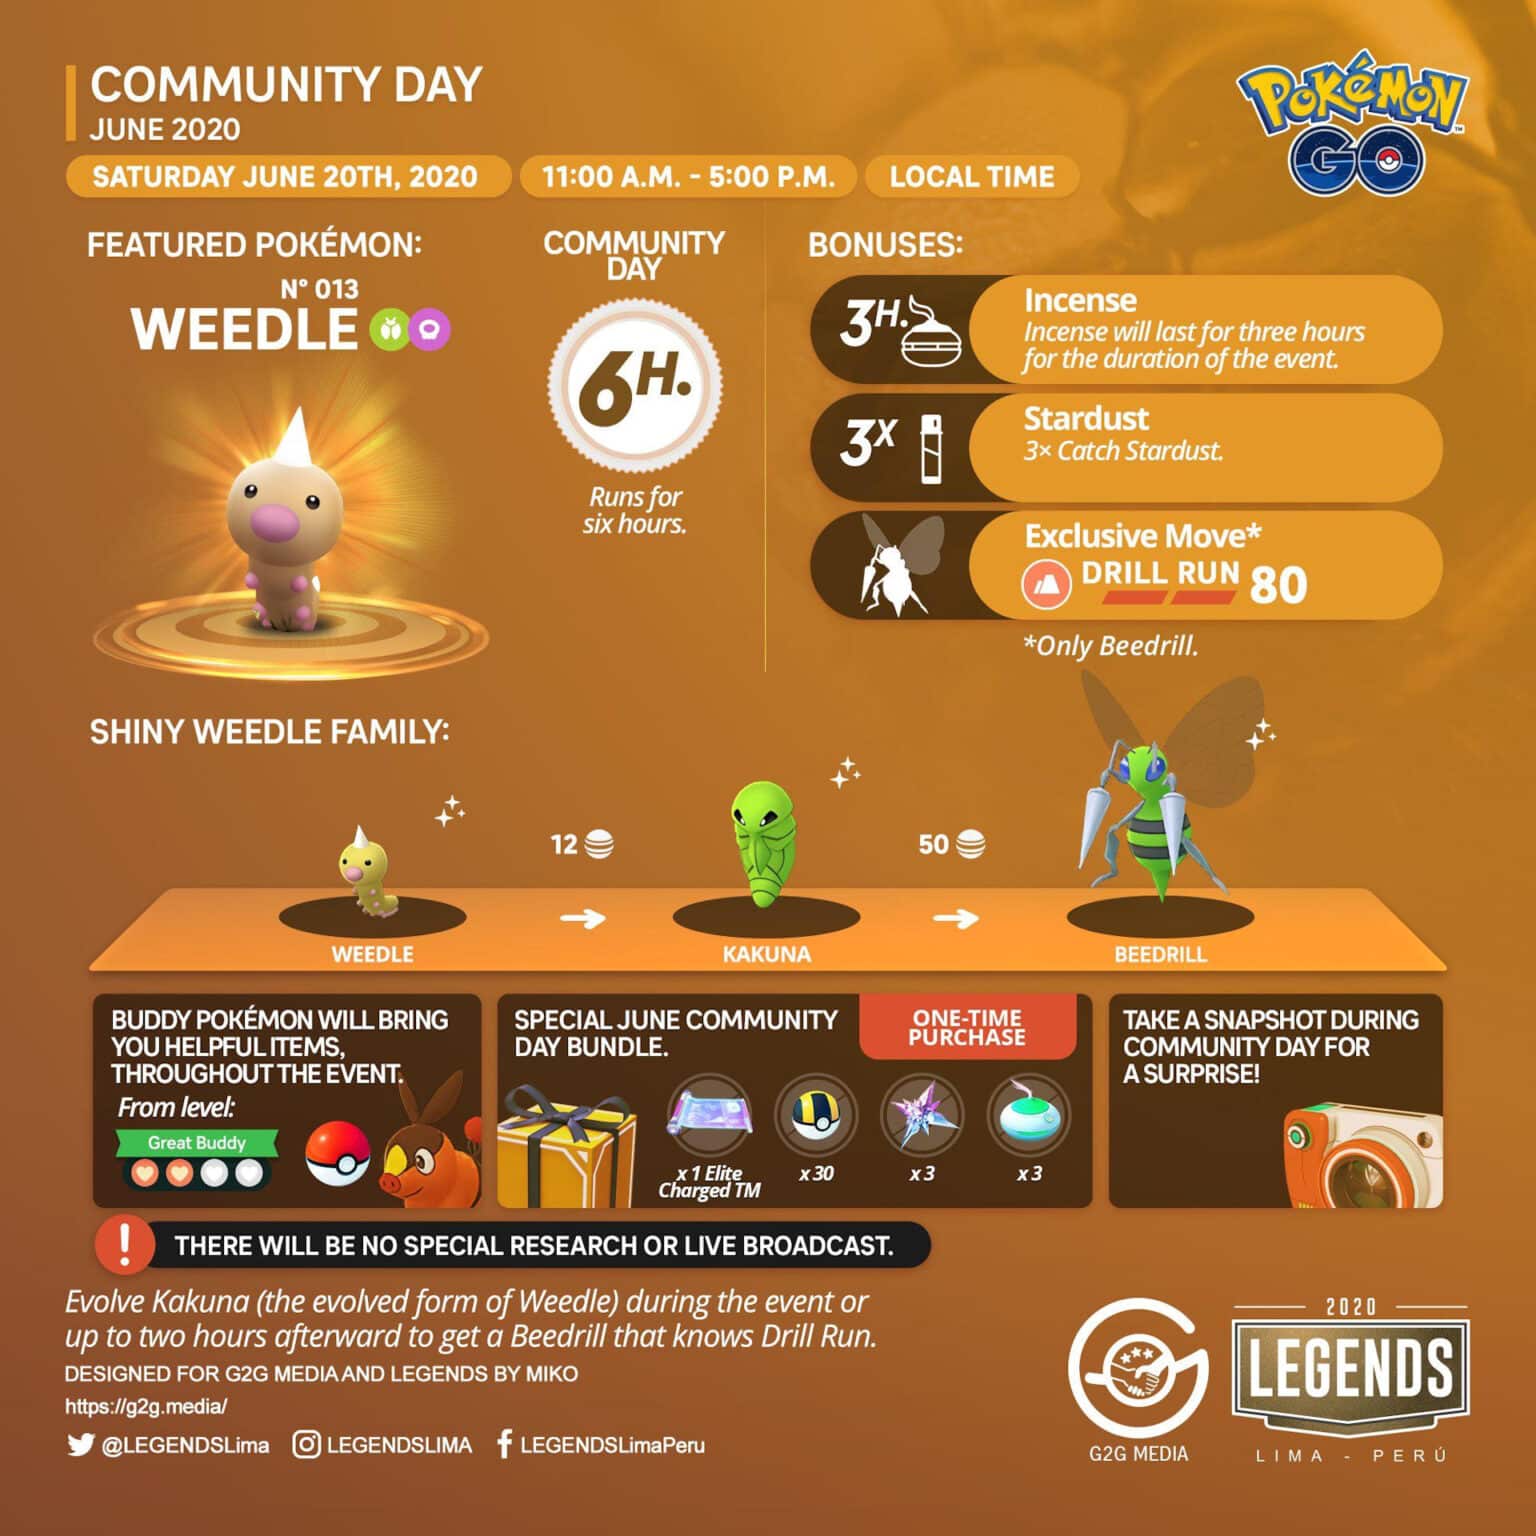 Pokemon Go June 2020 Community Day Date, Time & Featured Pokemon Announced